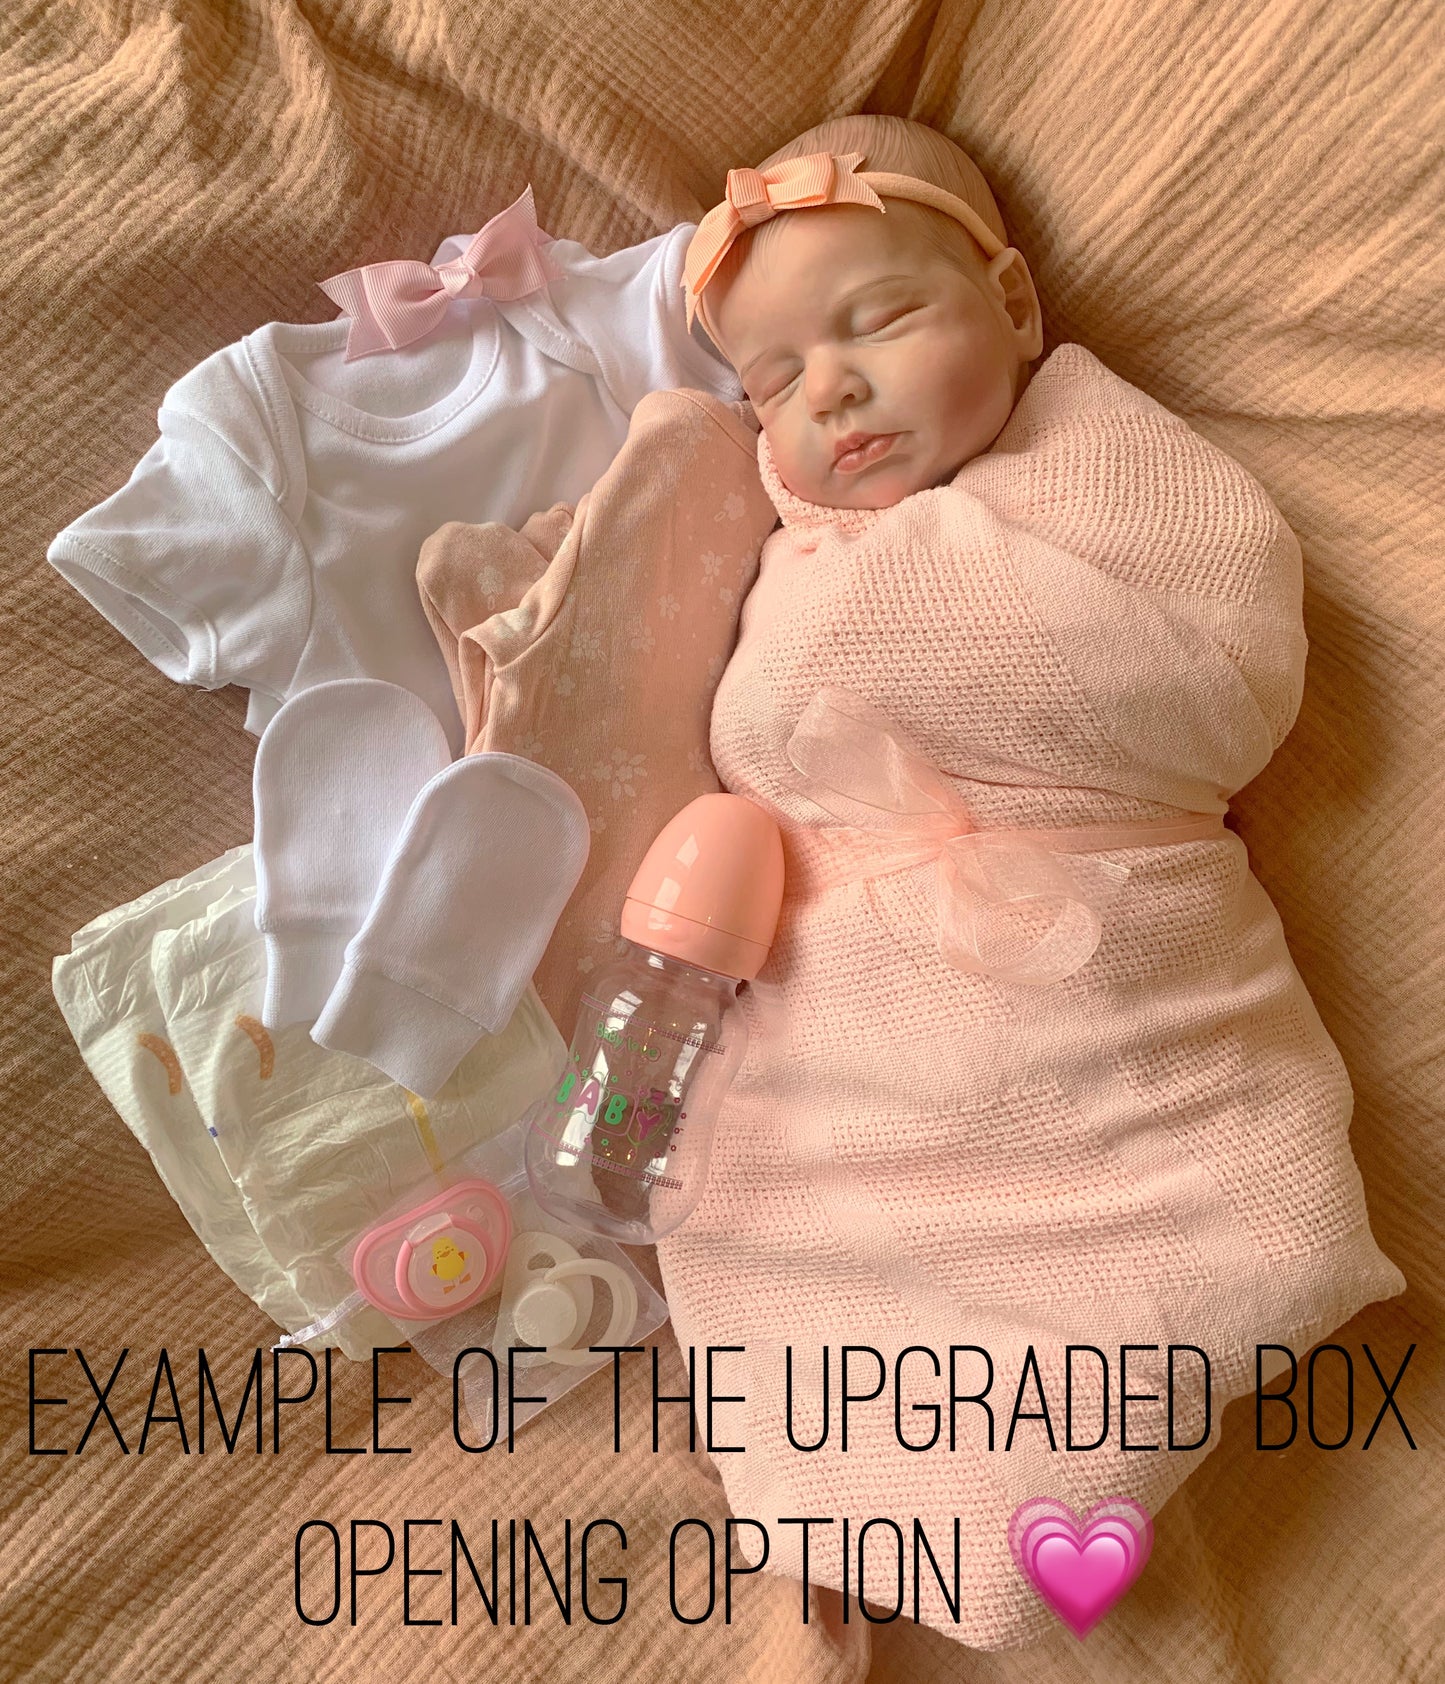 UK SELLER 19” Newborn Reborn Baby Girl Doll Betsy